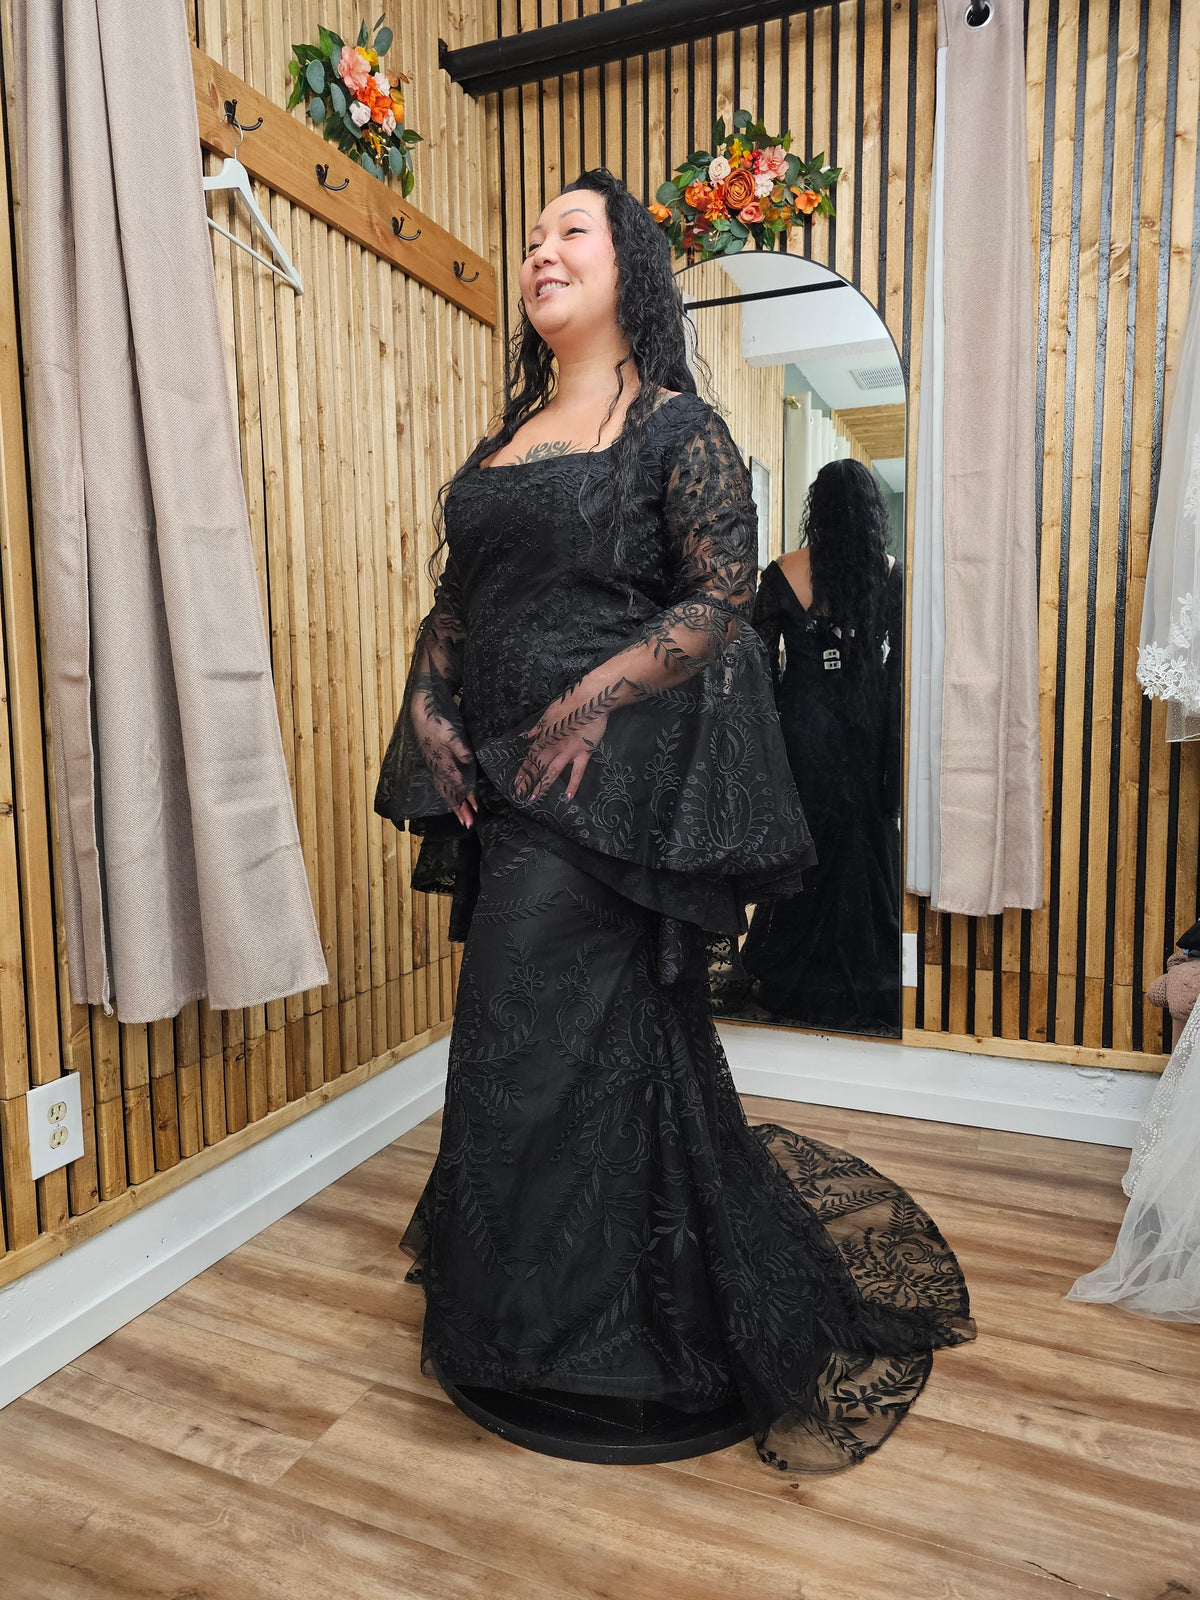 Elegant Black Lace Gothic Wedding Dress Bridal Long Lace Bat Sleeves Square Neckline Rustic Sheath Silhouette